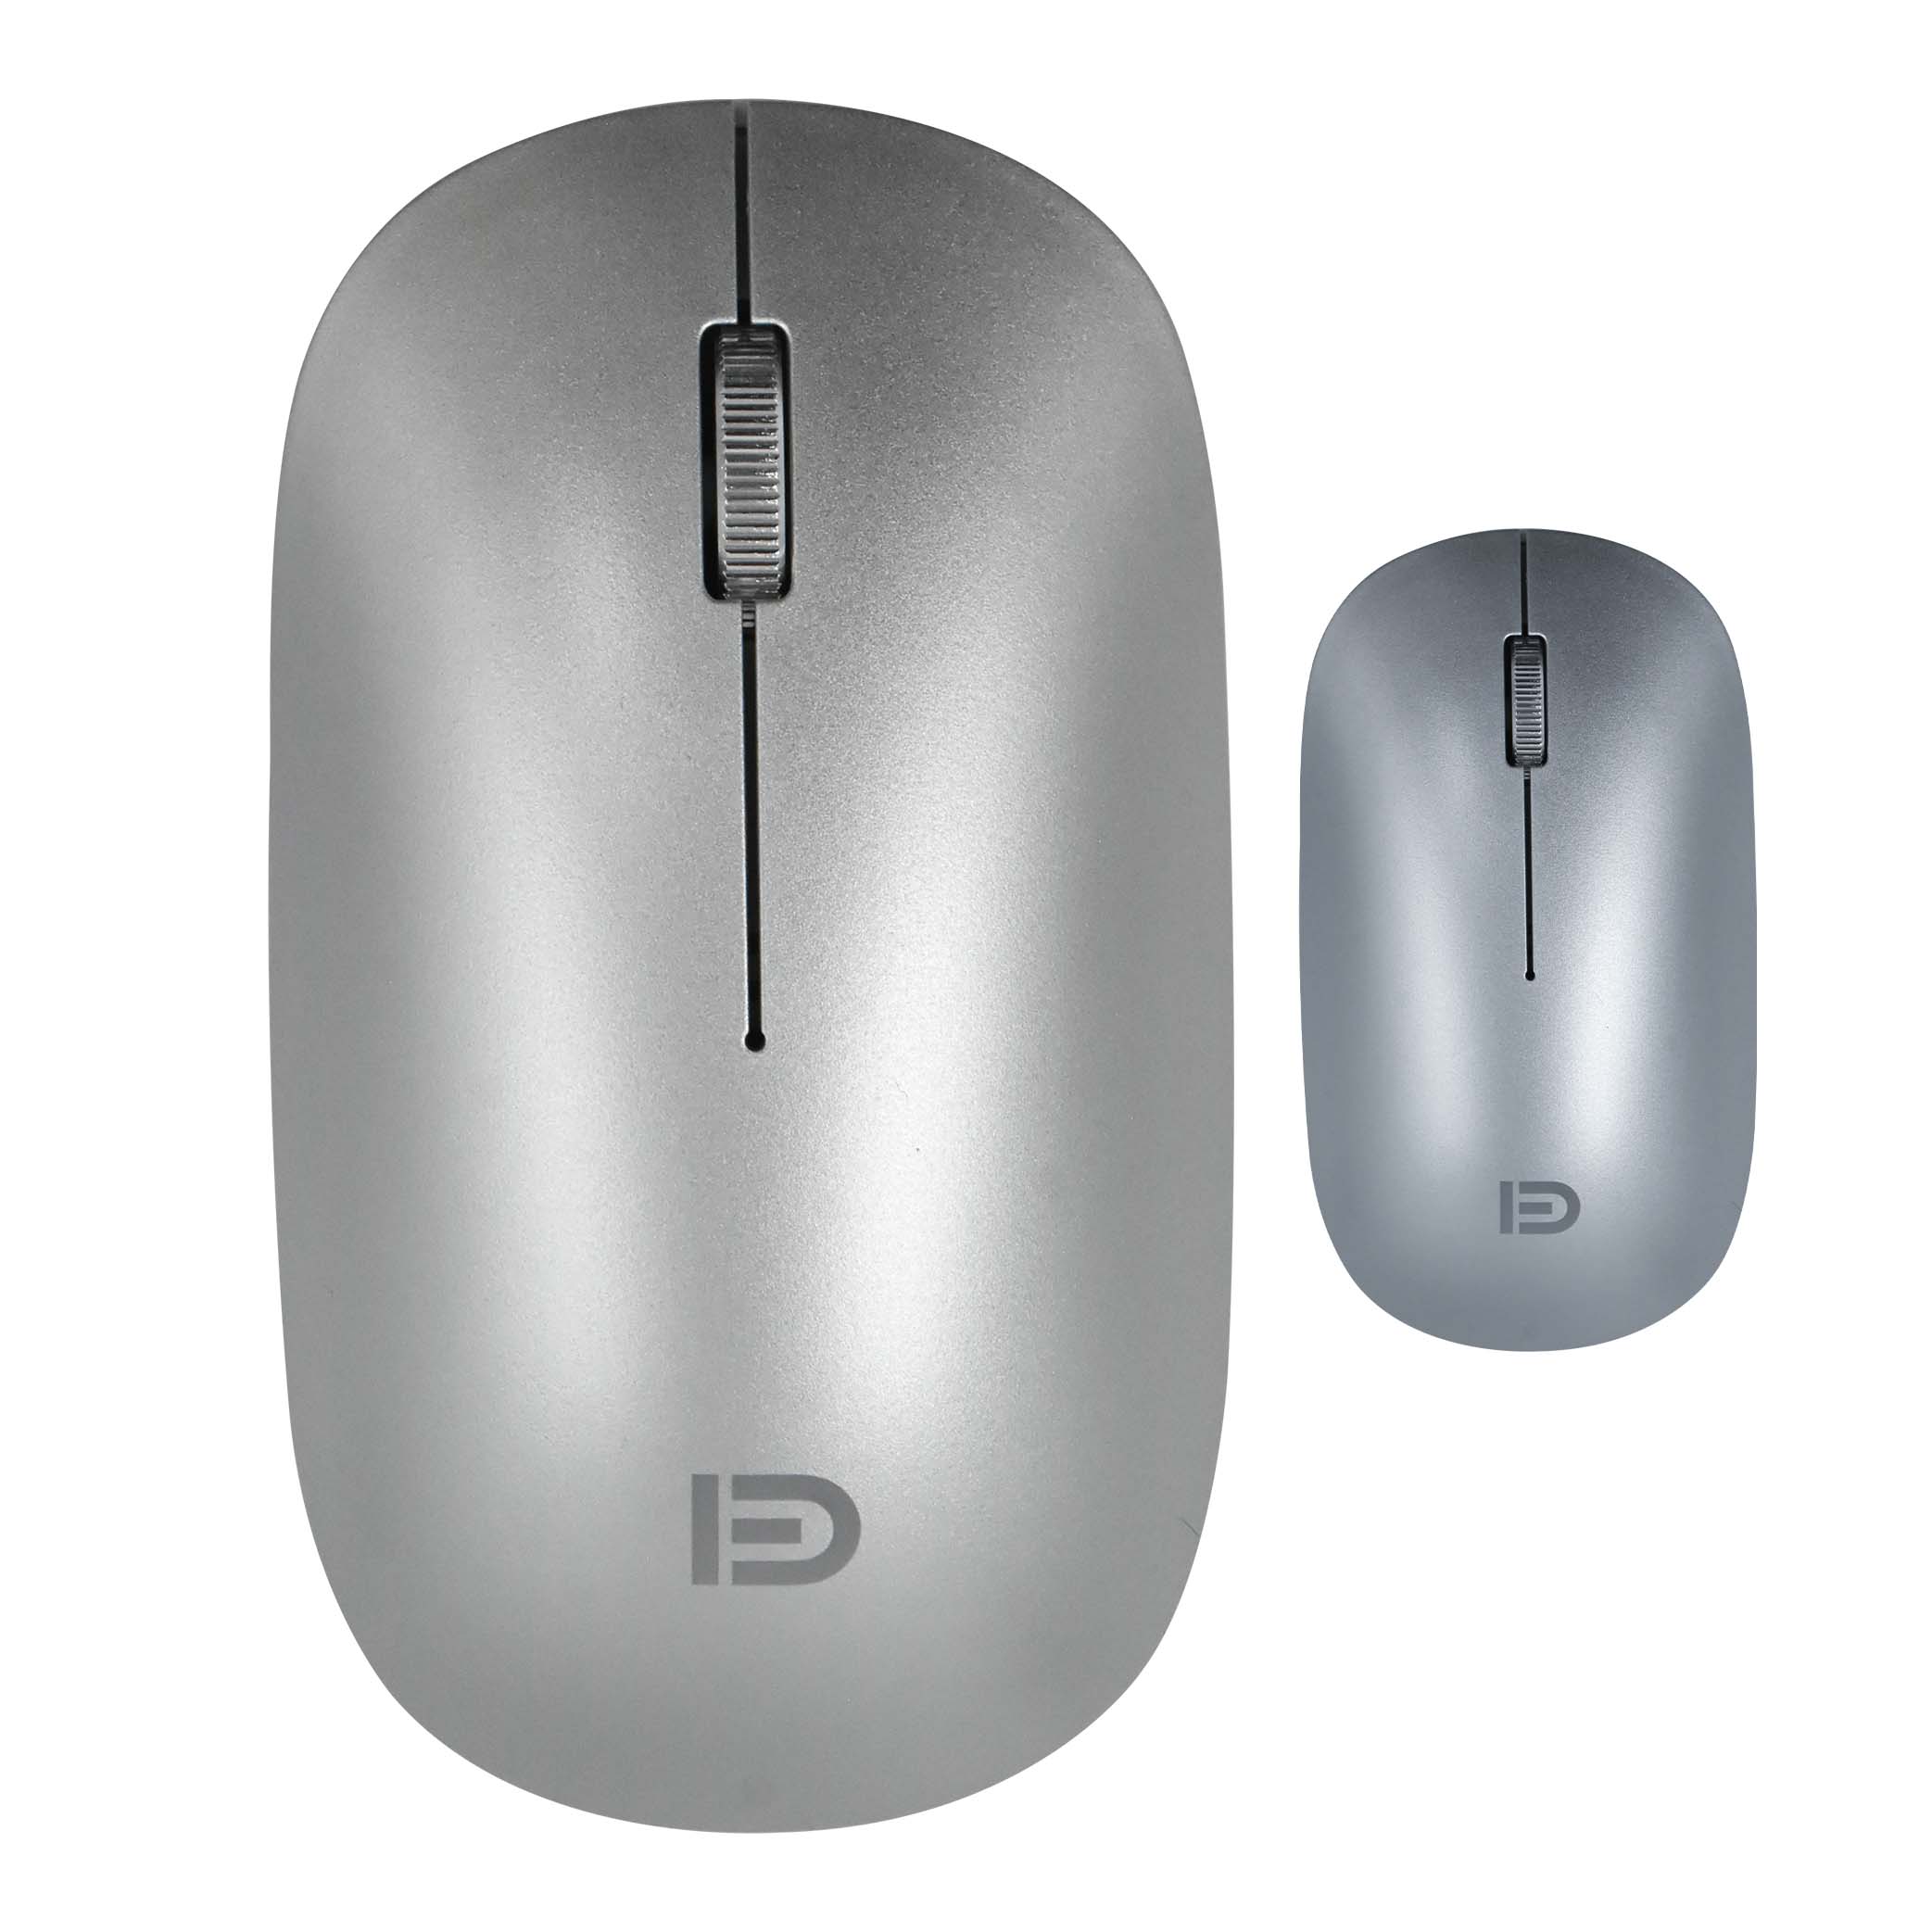 FD E318D Stylish Wireless Office Mouse